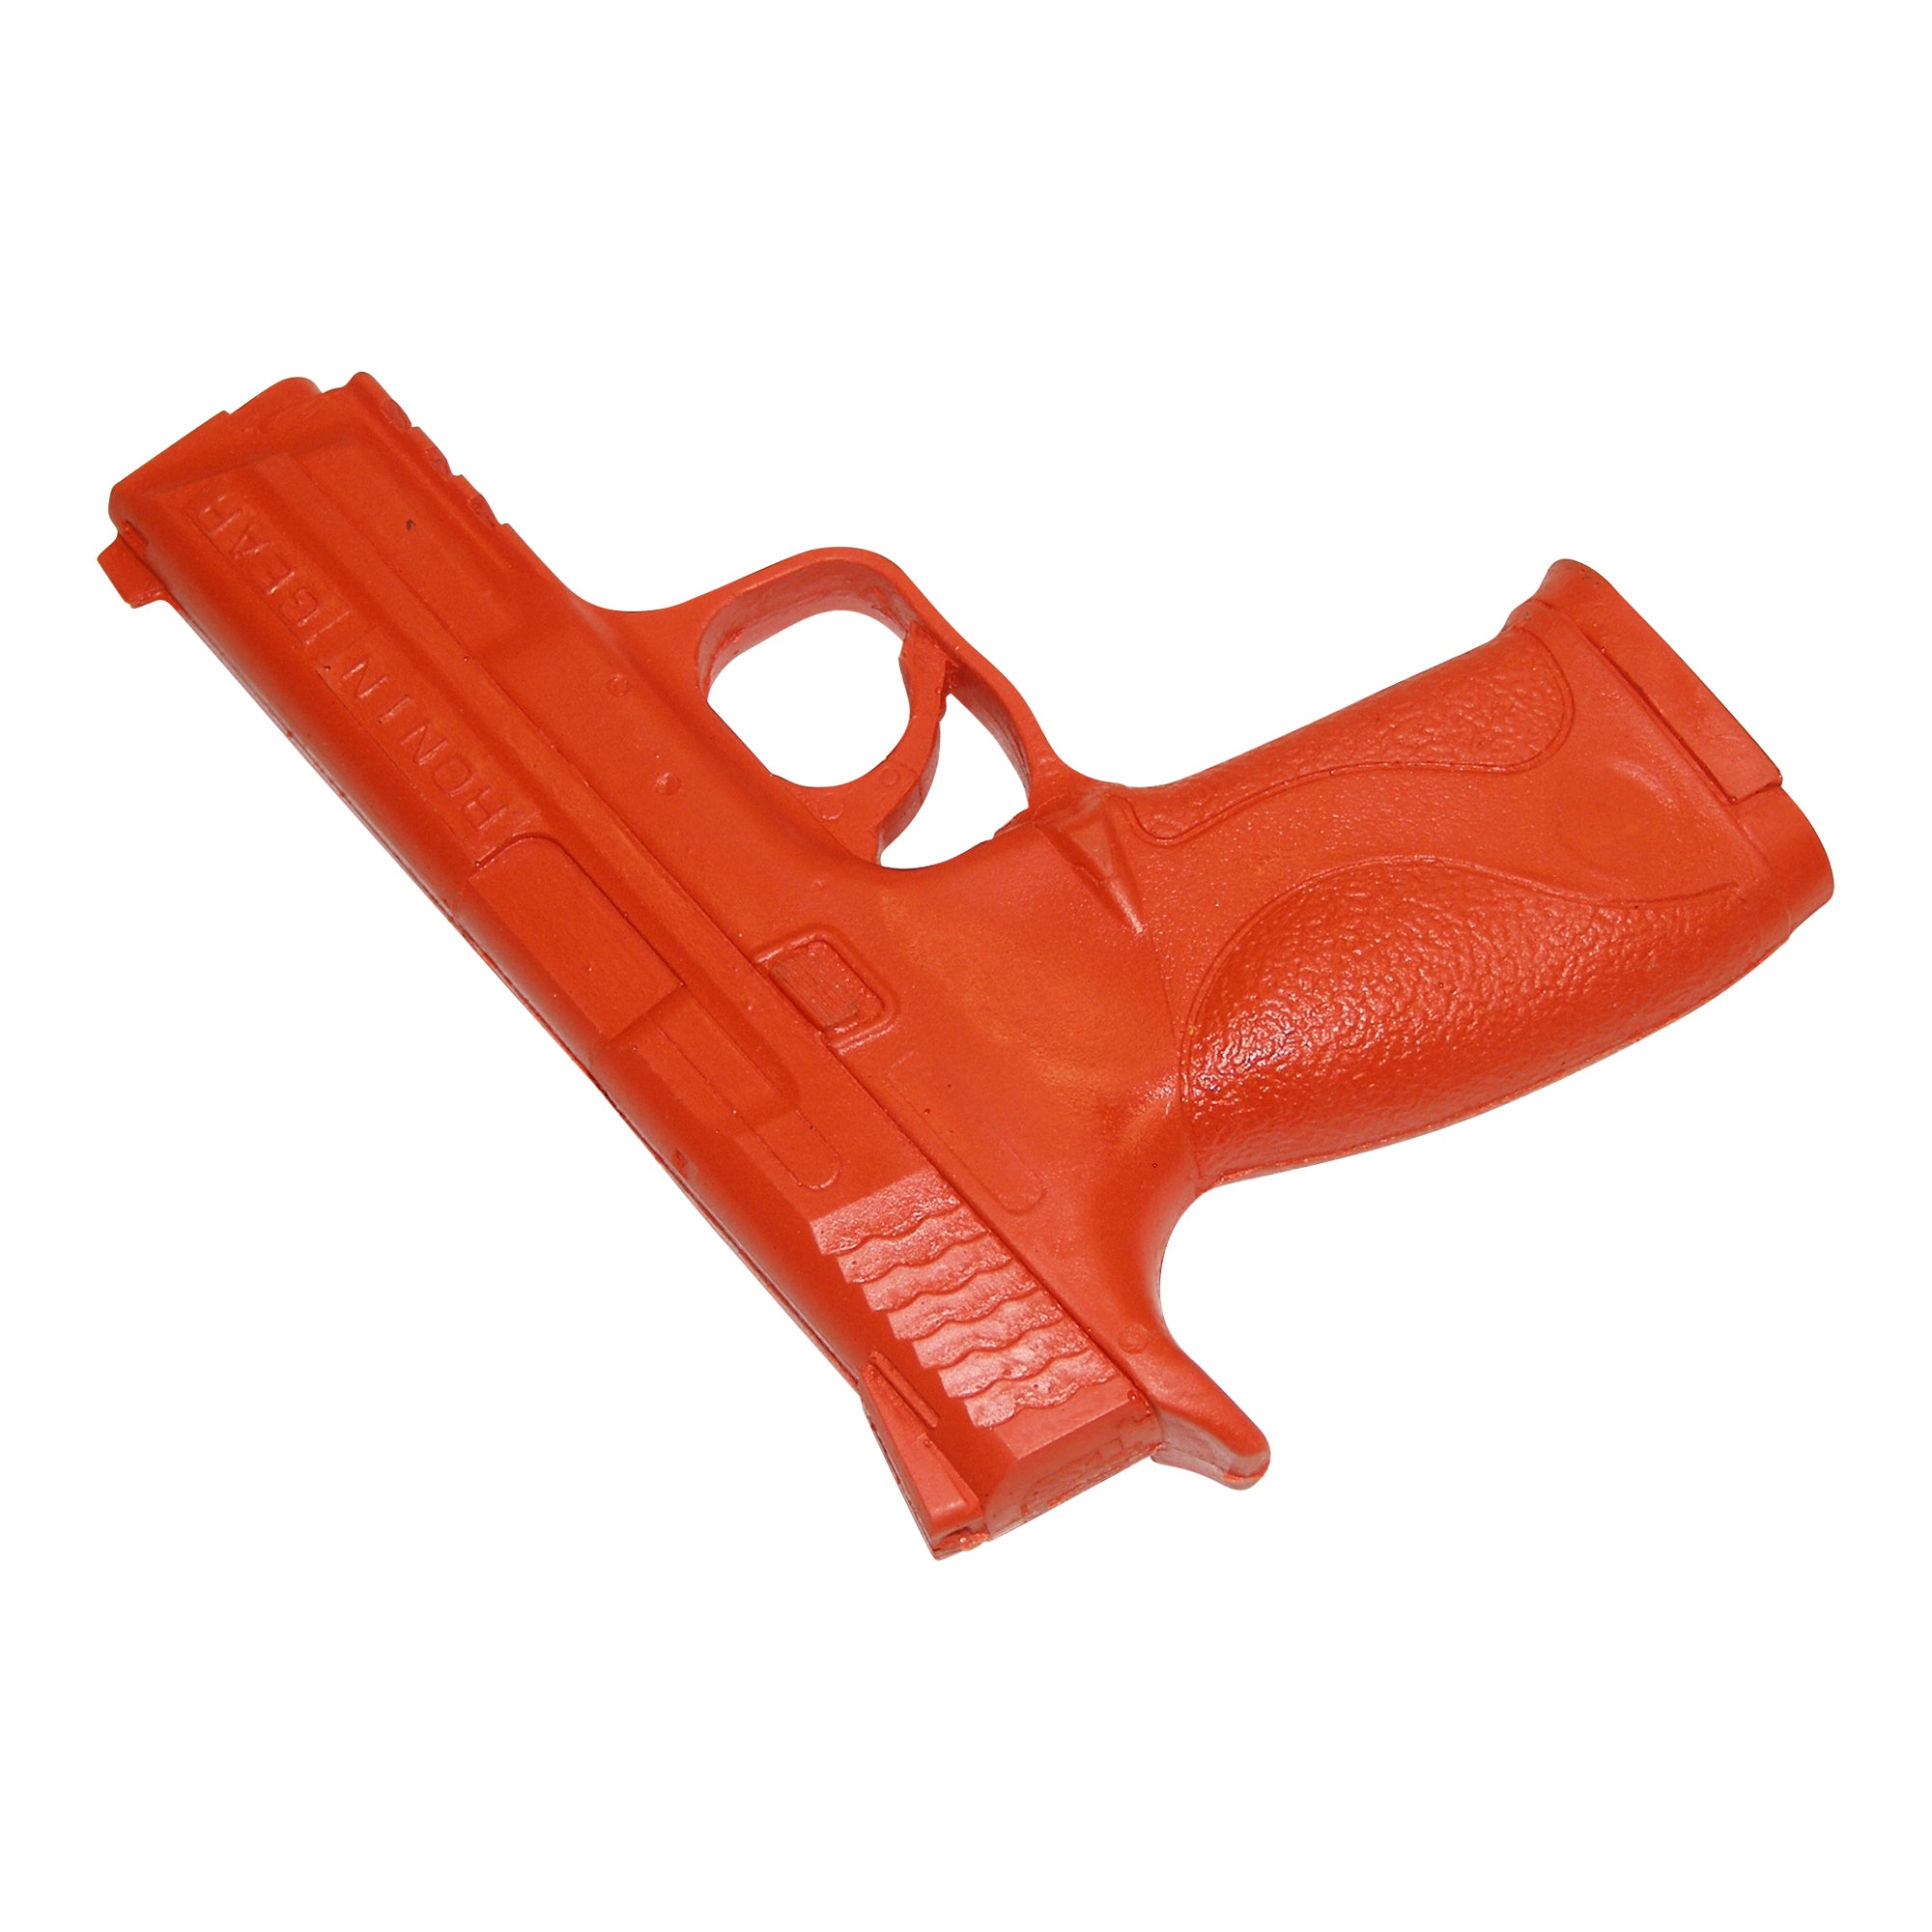 Rubber Standard M&P Training Gun Orange USA